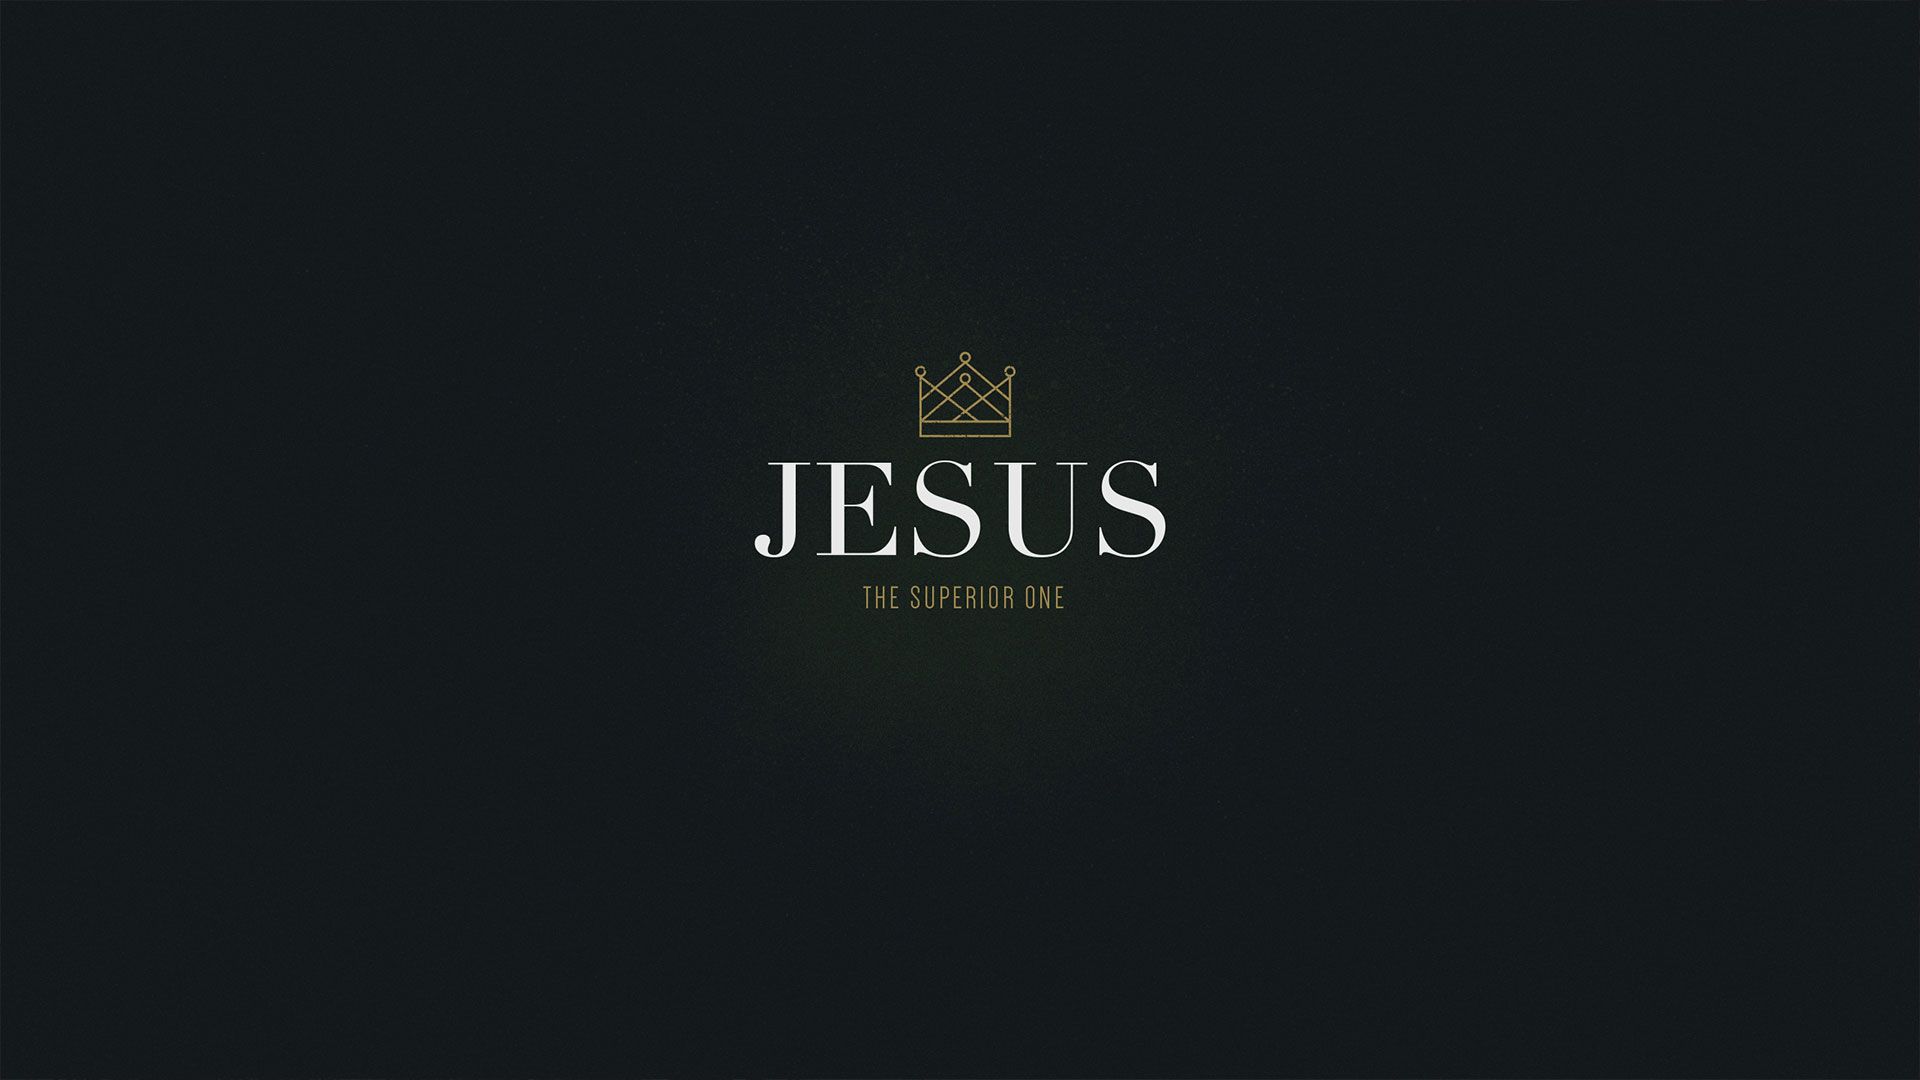 Jesus Logo Pictures Wallpapers